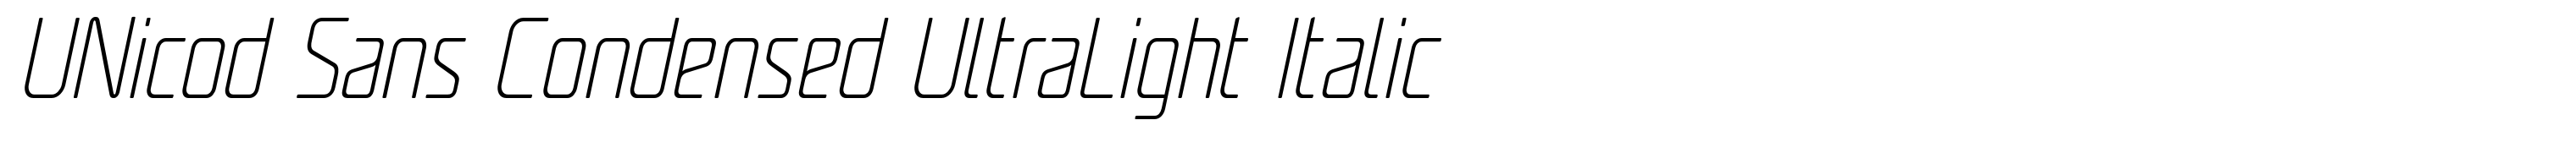 UNicod Sans Condensed UltraLight Italic